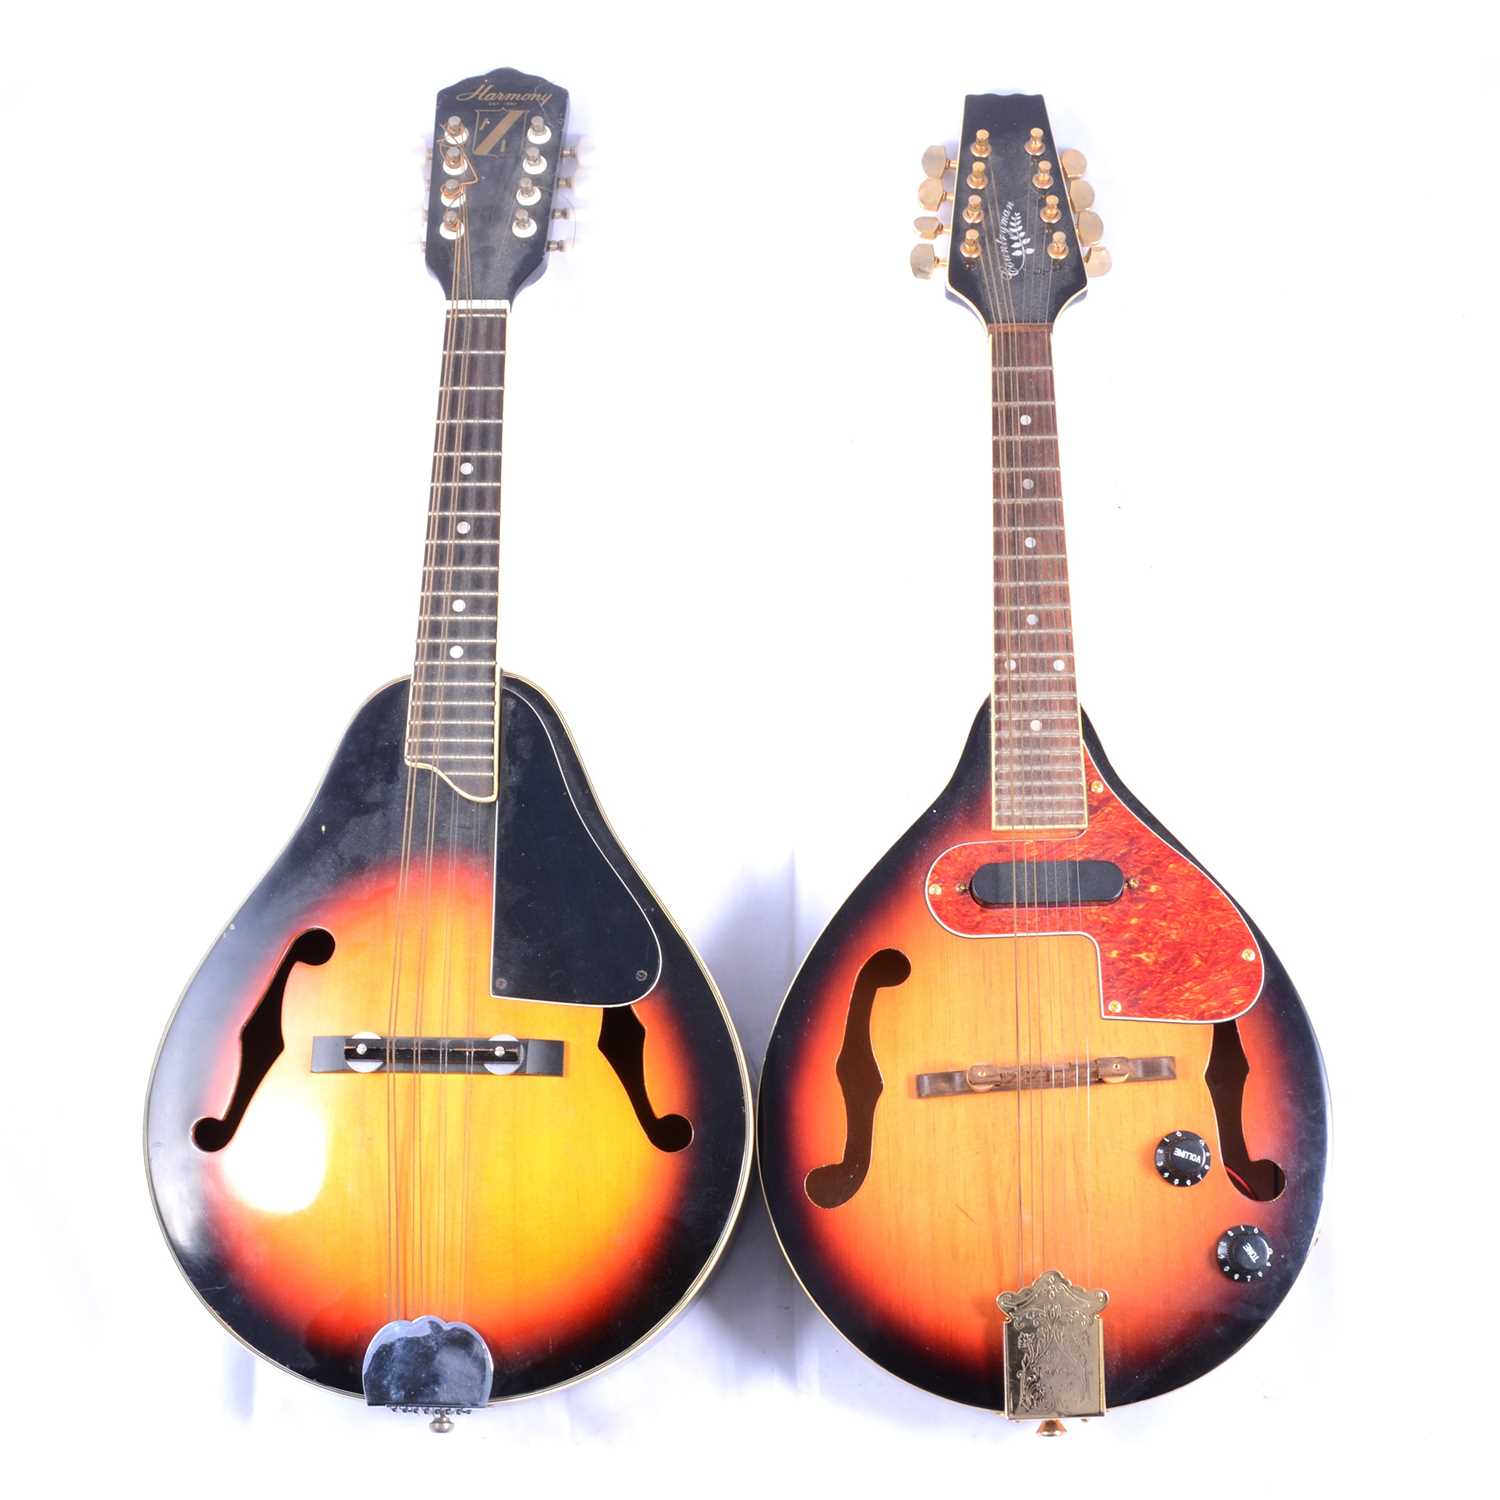 Two eight-string mandolins